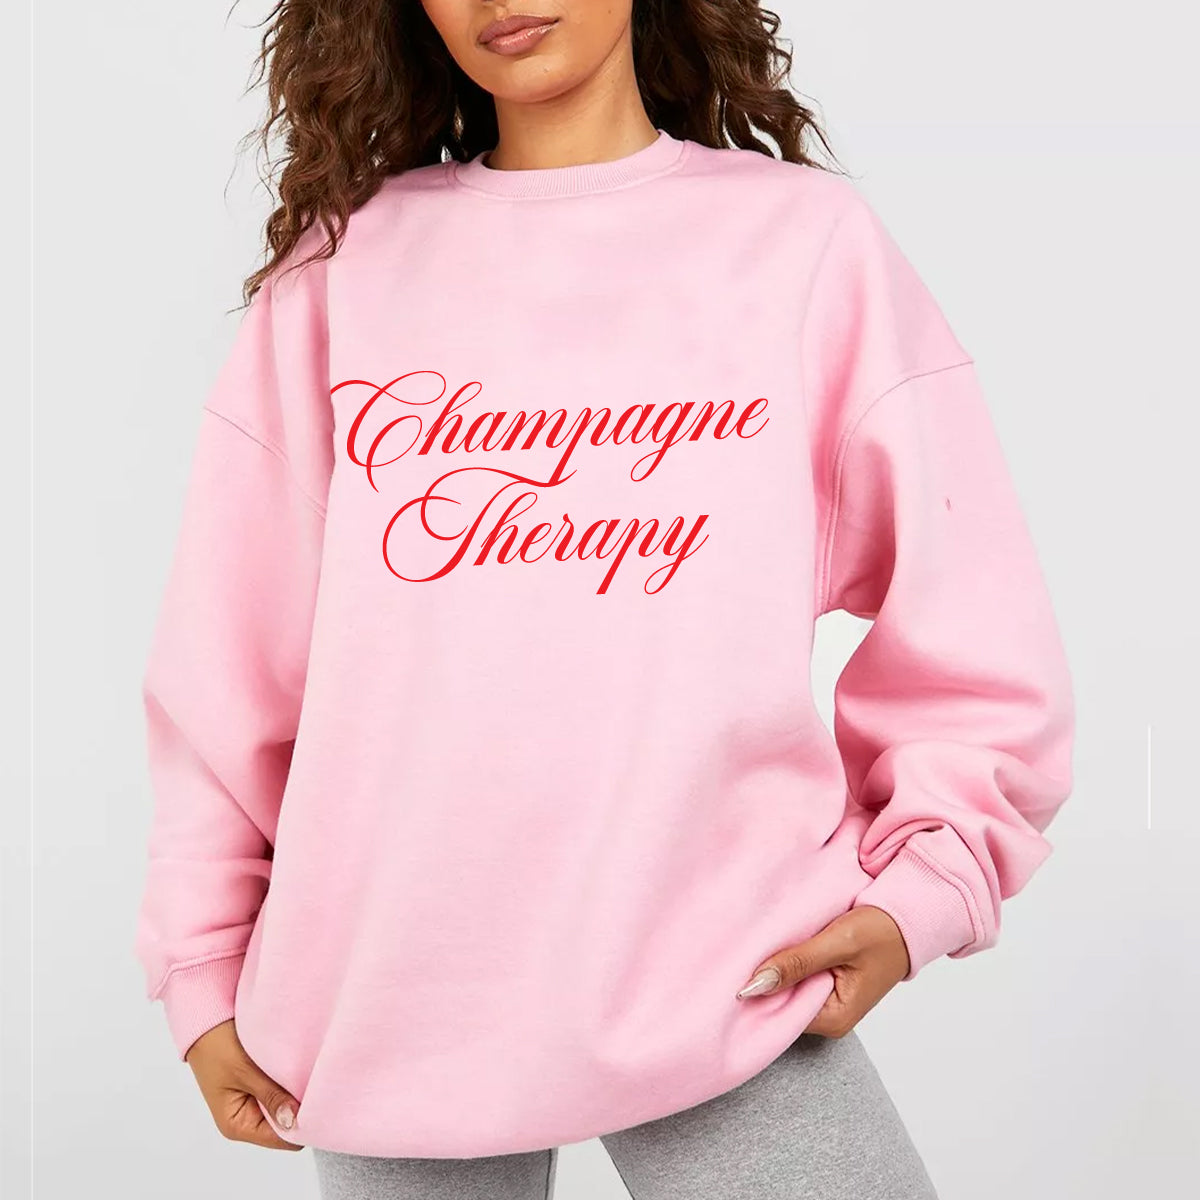 Champagne Therapy Sweatshirt